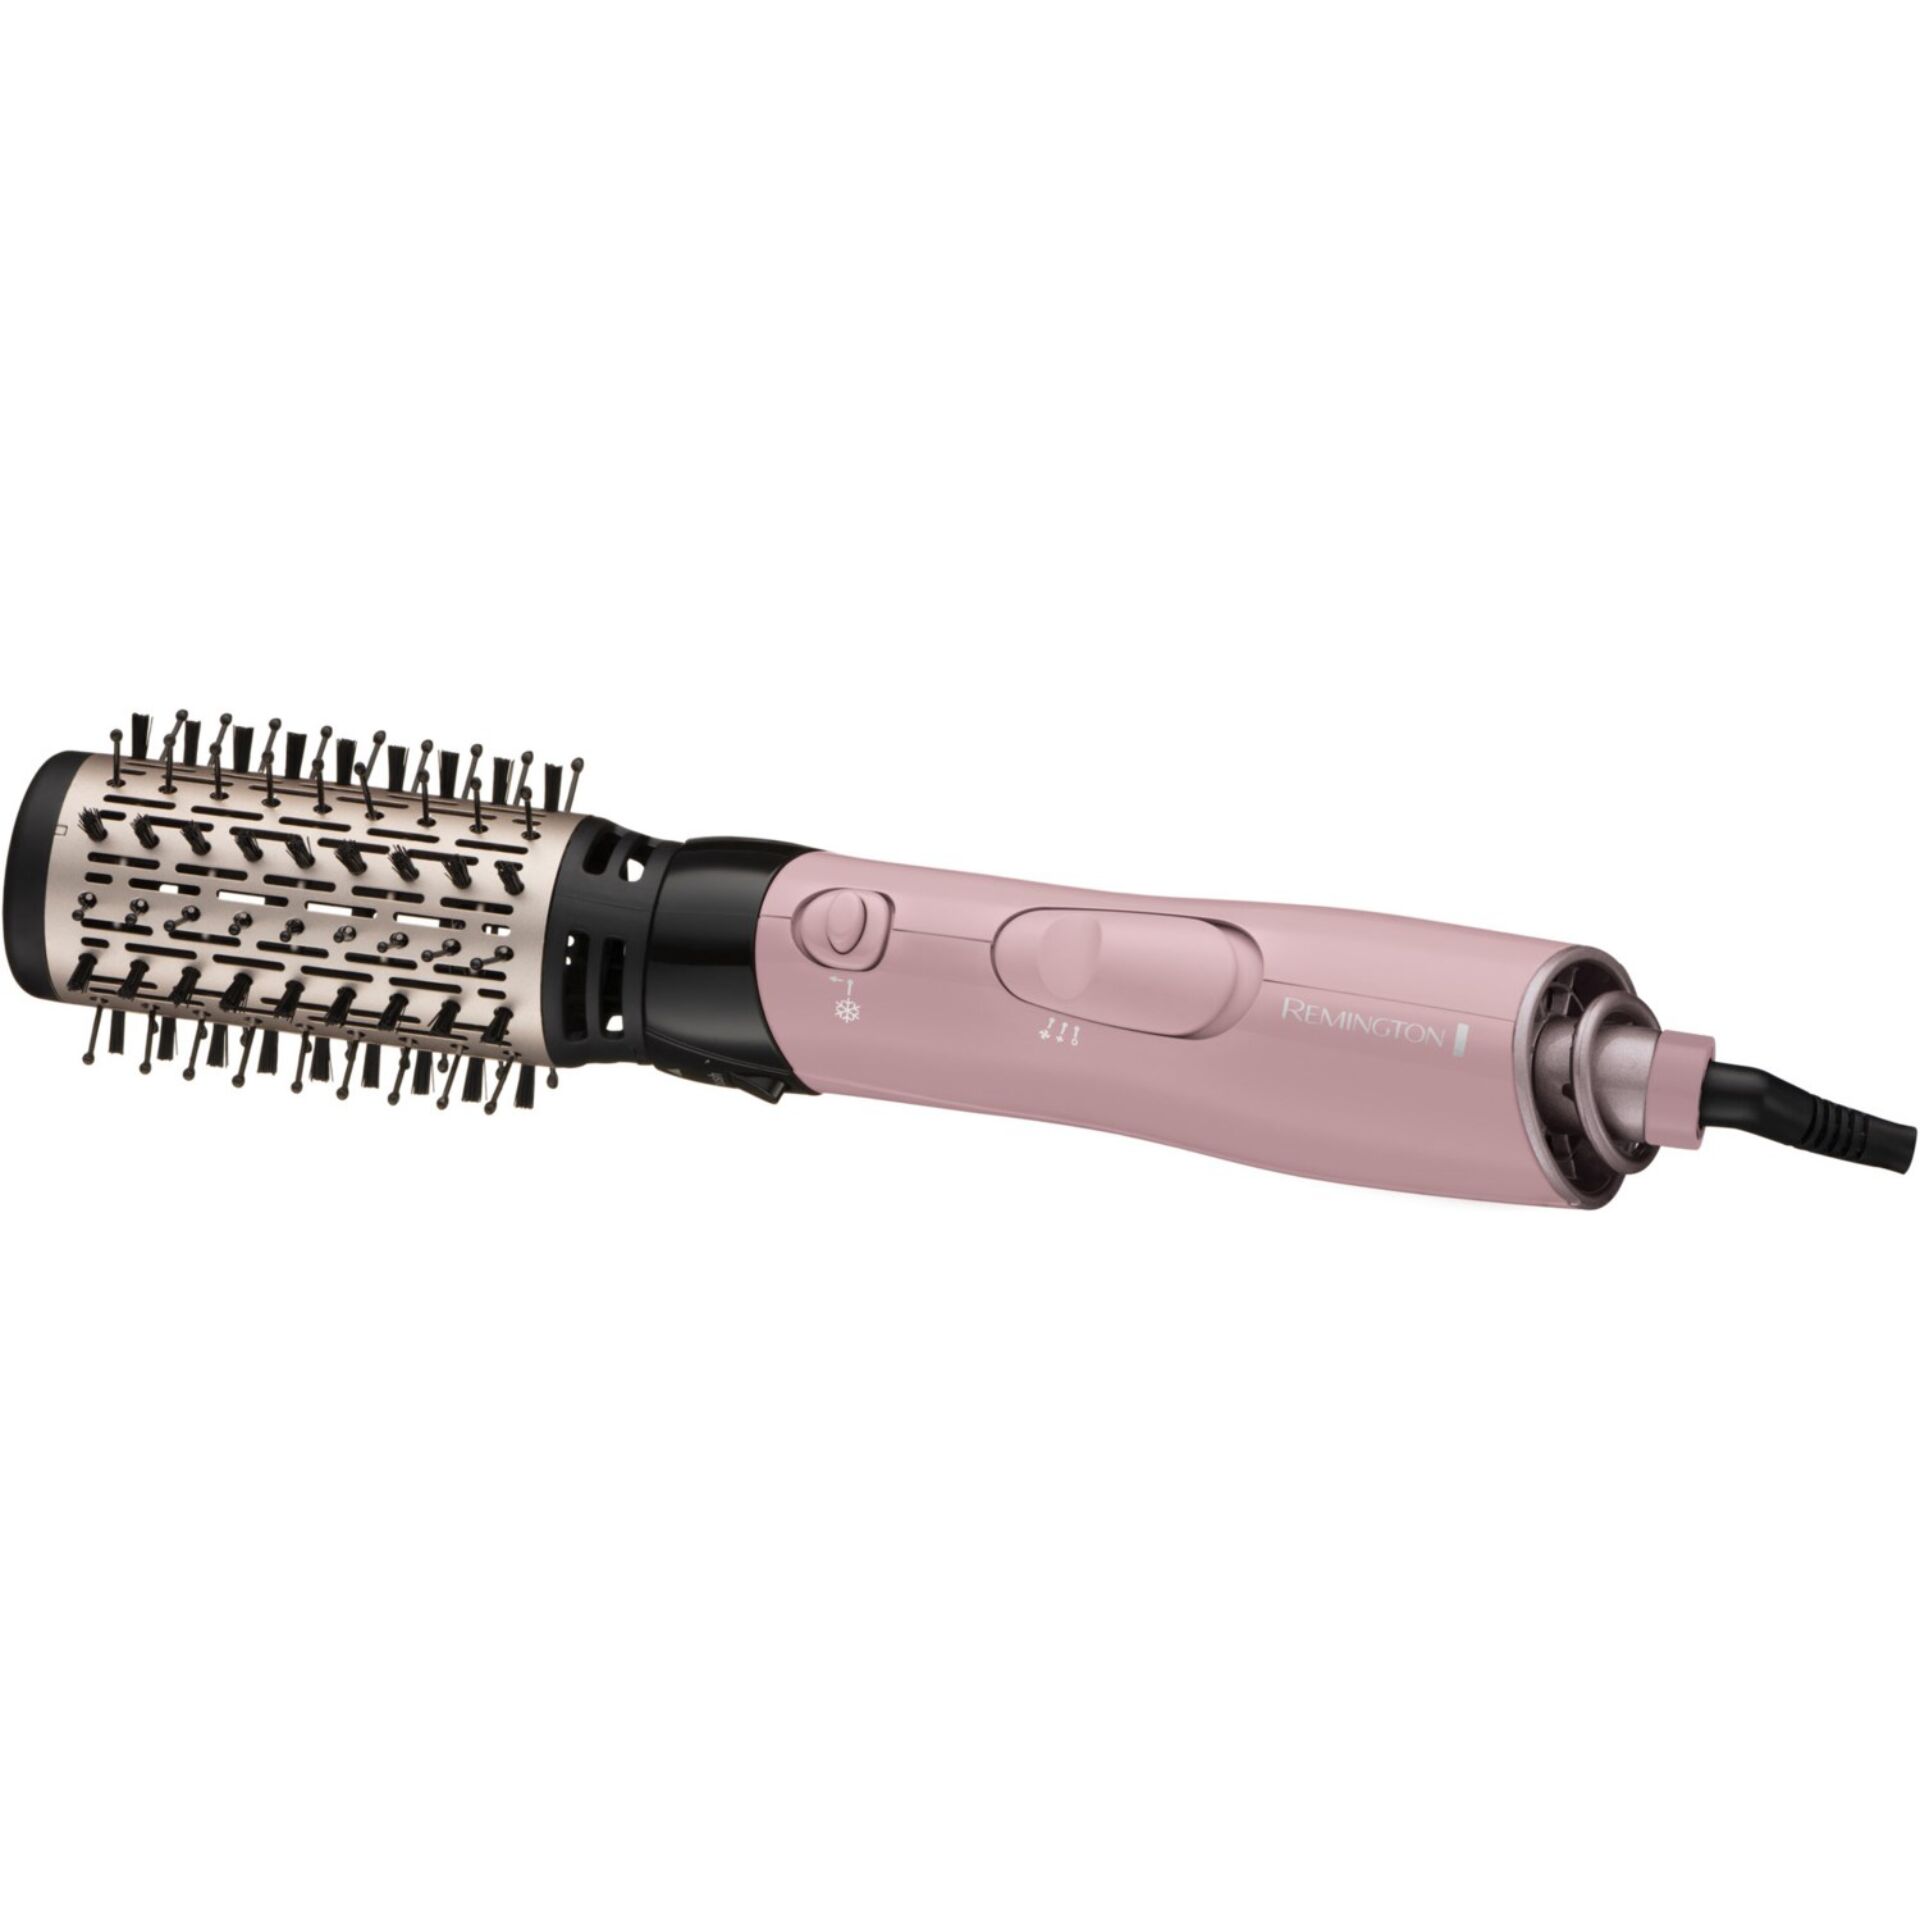 Remington AS5901 Hot air brush Pink 1000 W